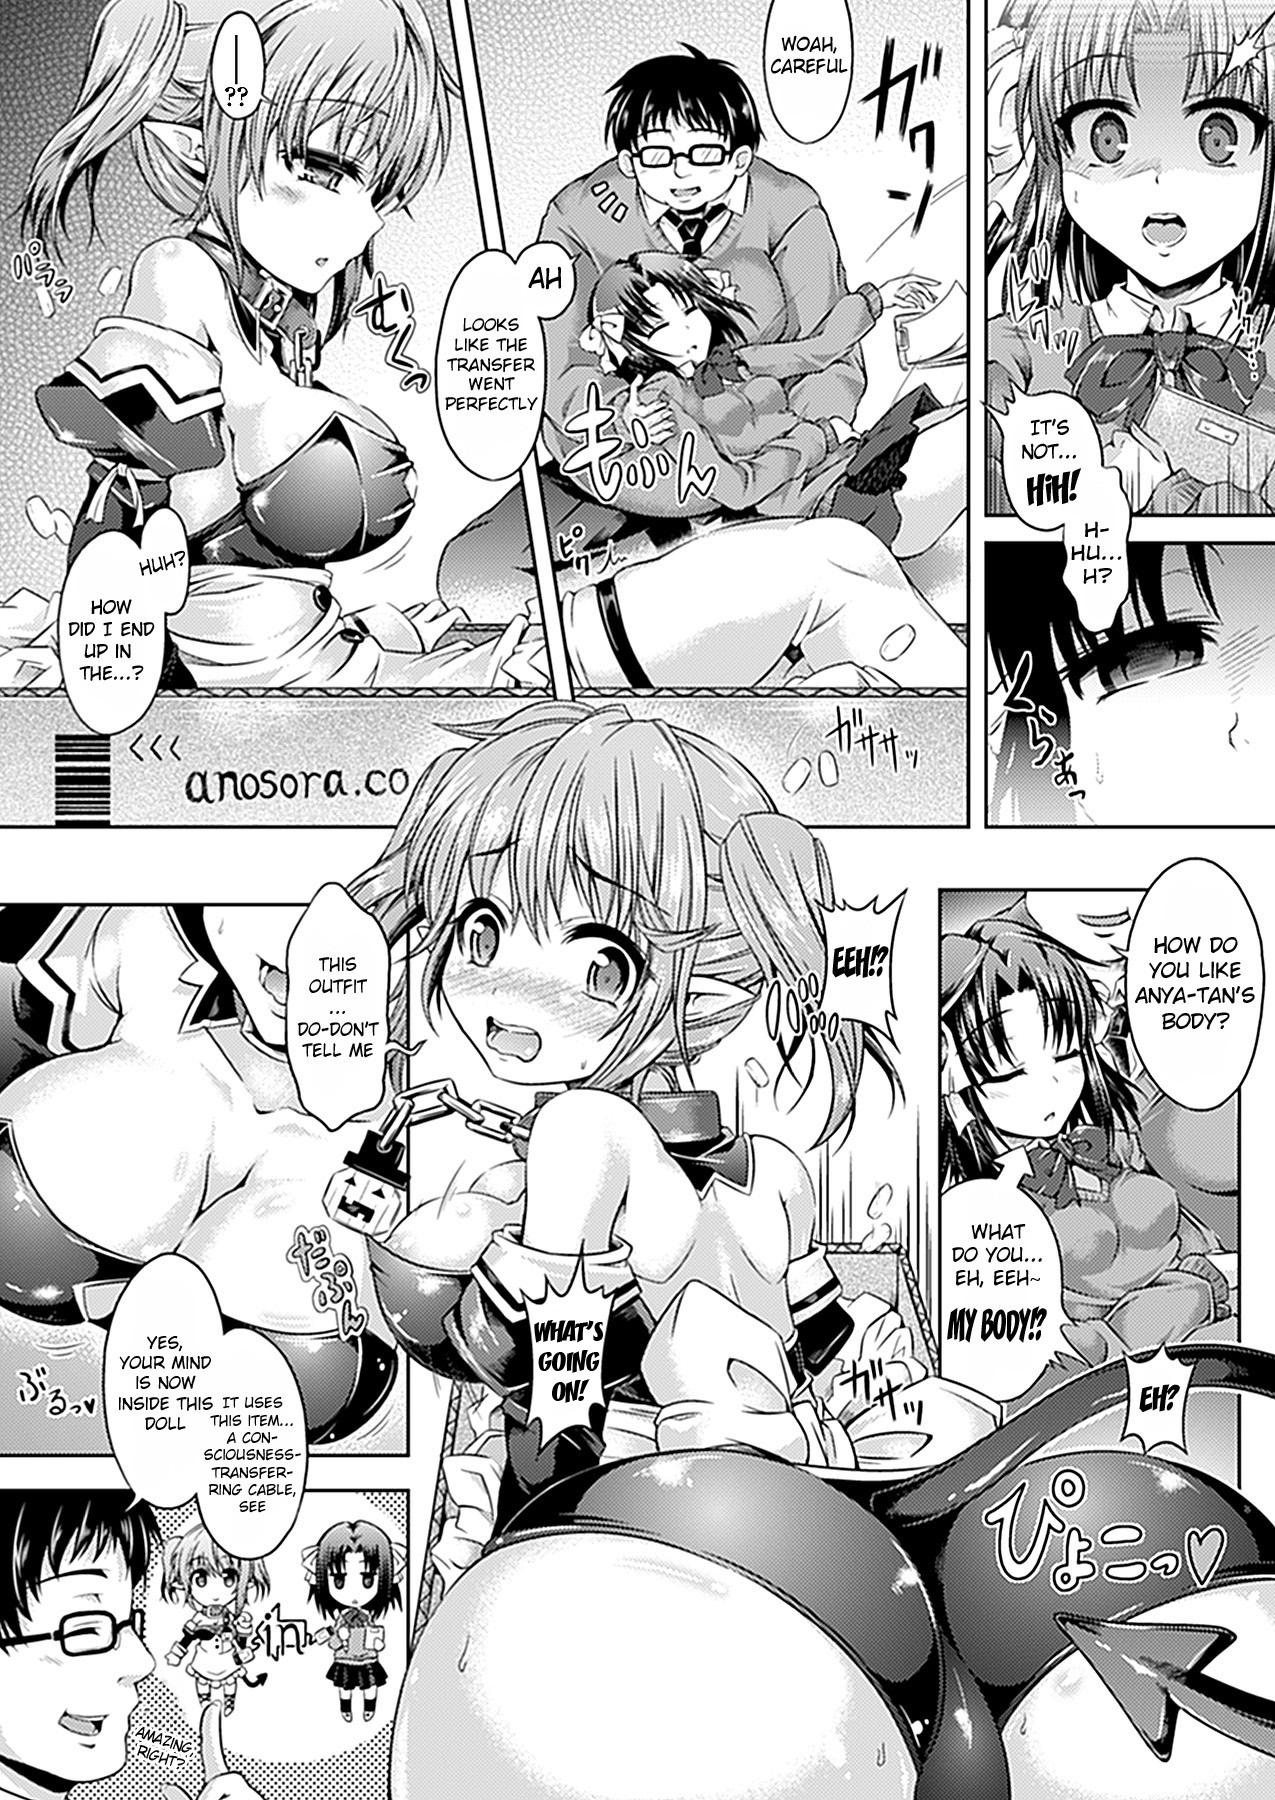 [Taniguchi-san] Girl Play - Trans-Sexual Fiction the Girls Play - ⚤TSF Catalog (English) {doujin-moe.us} 4